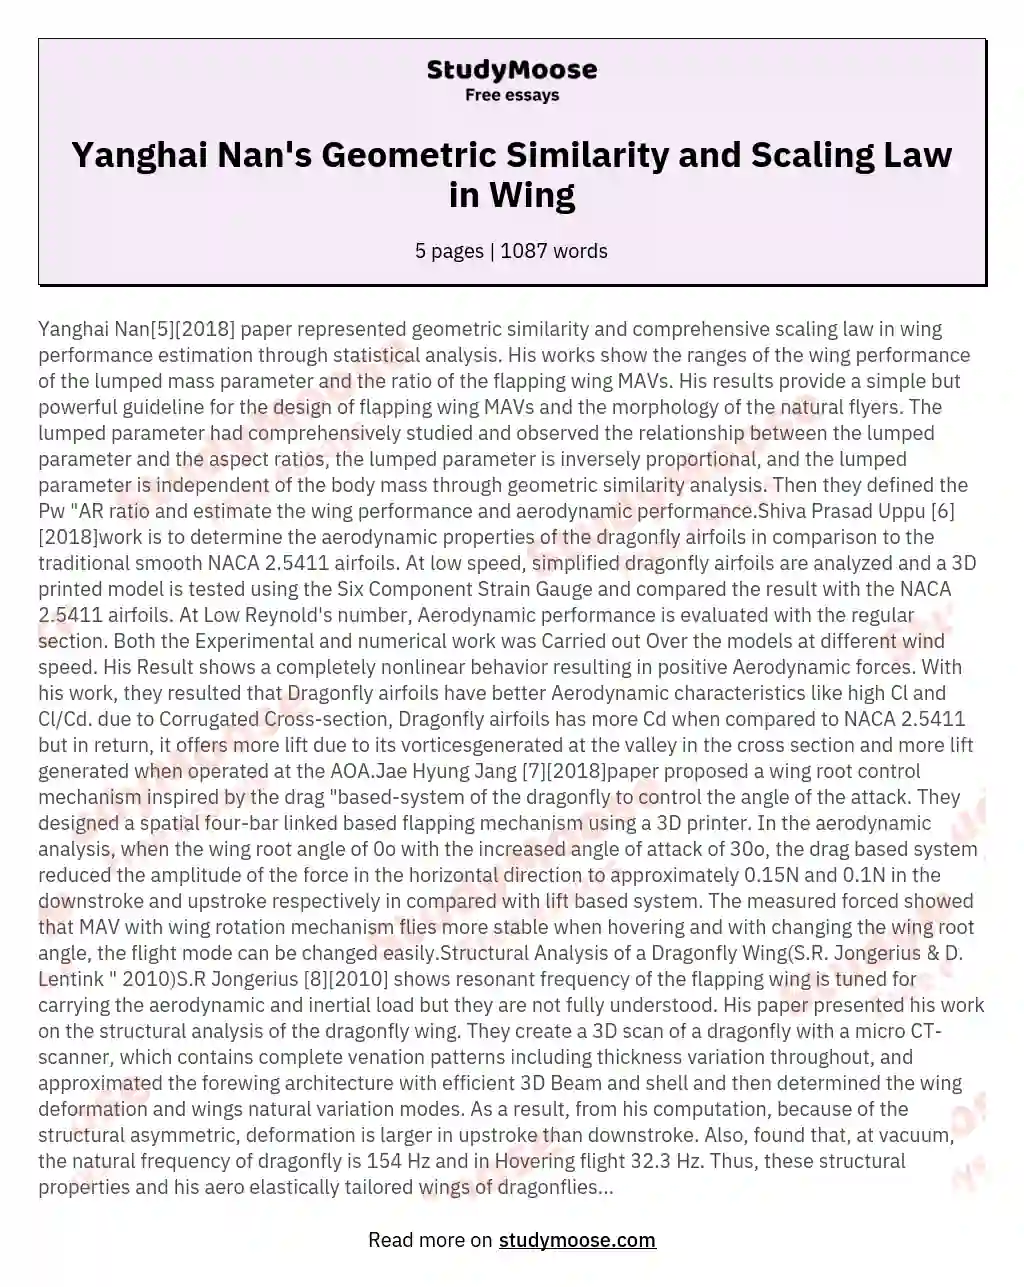 Yanghai Nan's Geometric Similarity and Scaling Law in Wing essay